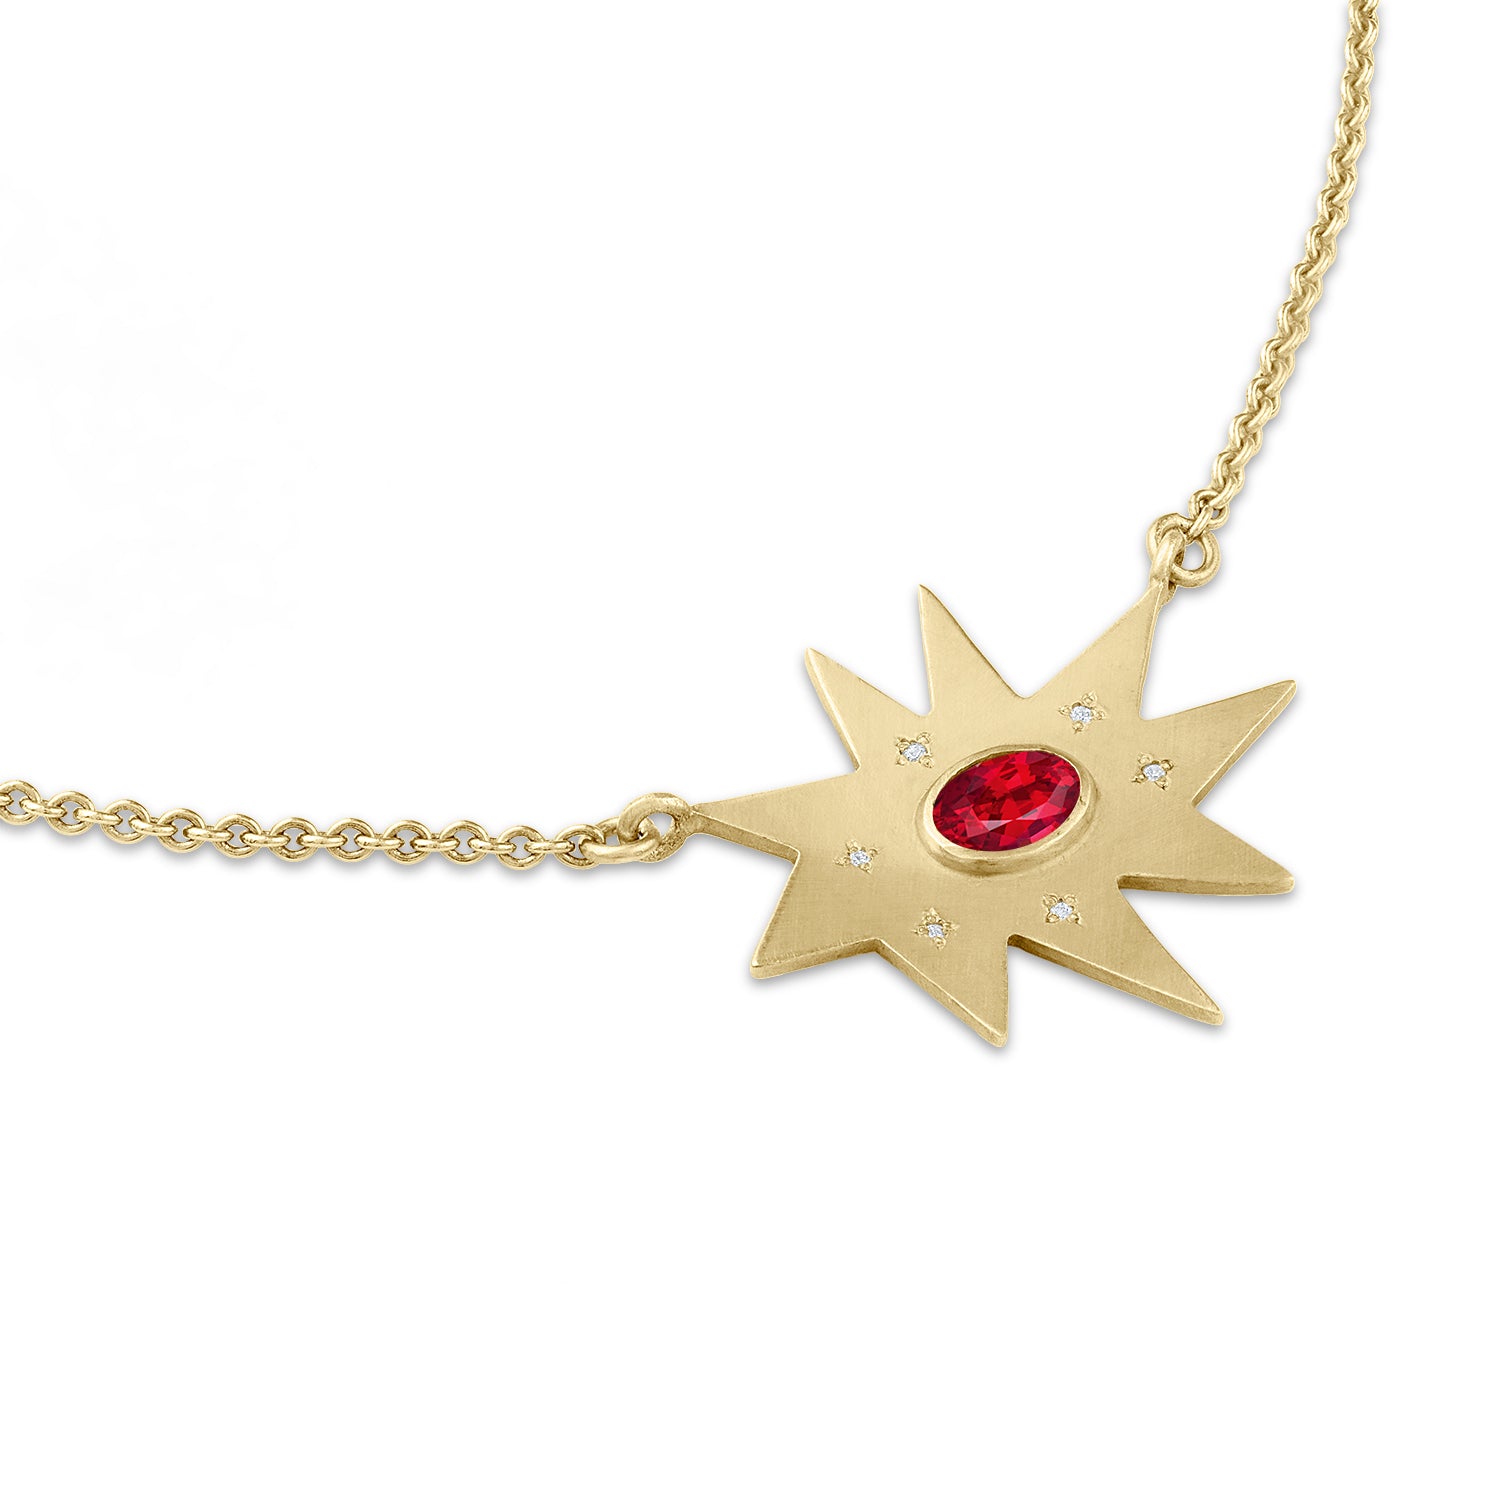 Gold Stella/KAPOW! Necklace: Garnet